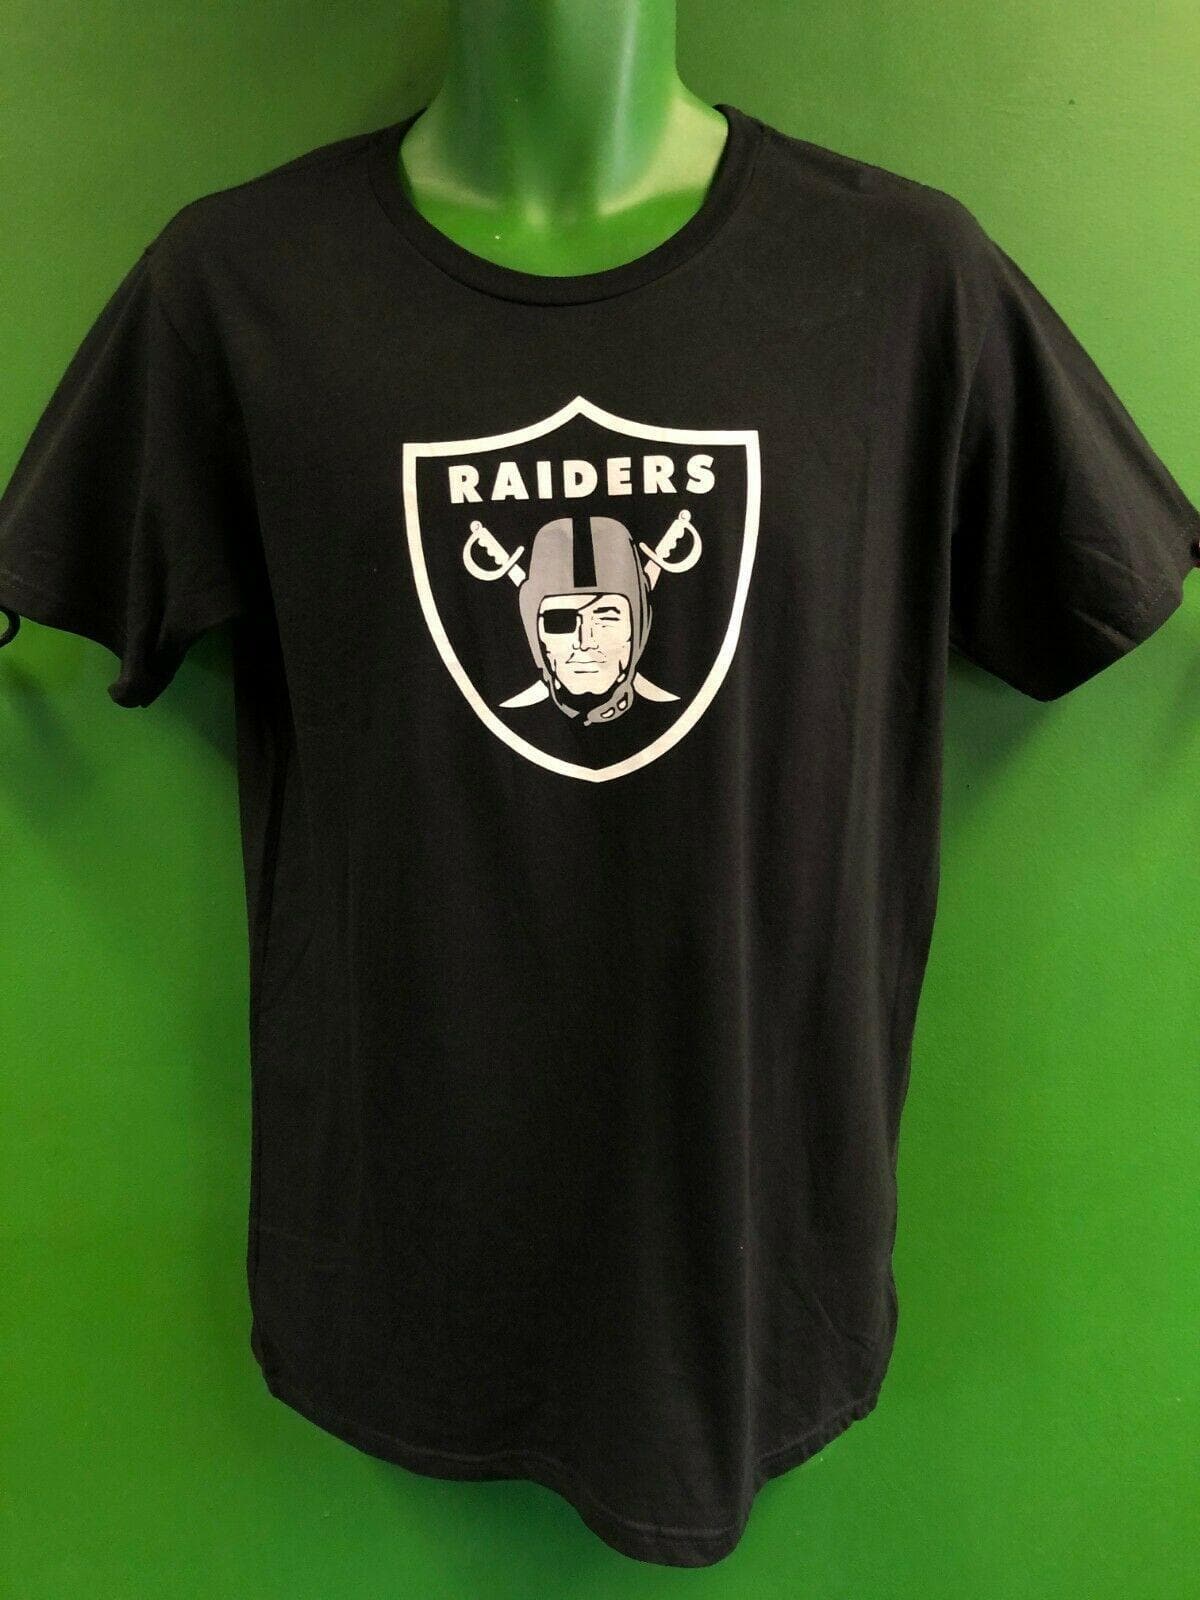 NFL Las Vegas Raiders Pro Line Fanatics T-Shirt Men's Medium NWT